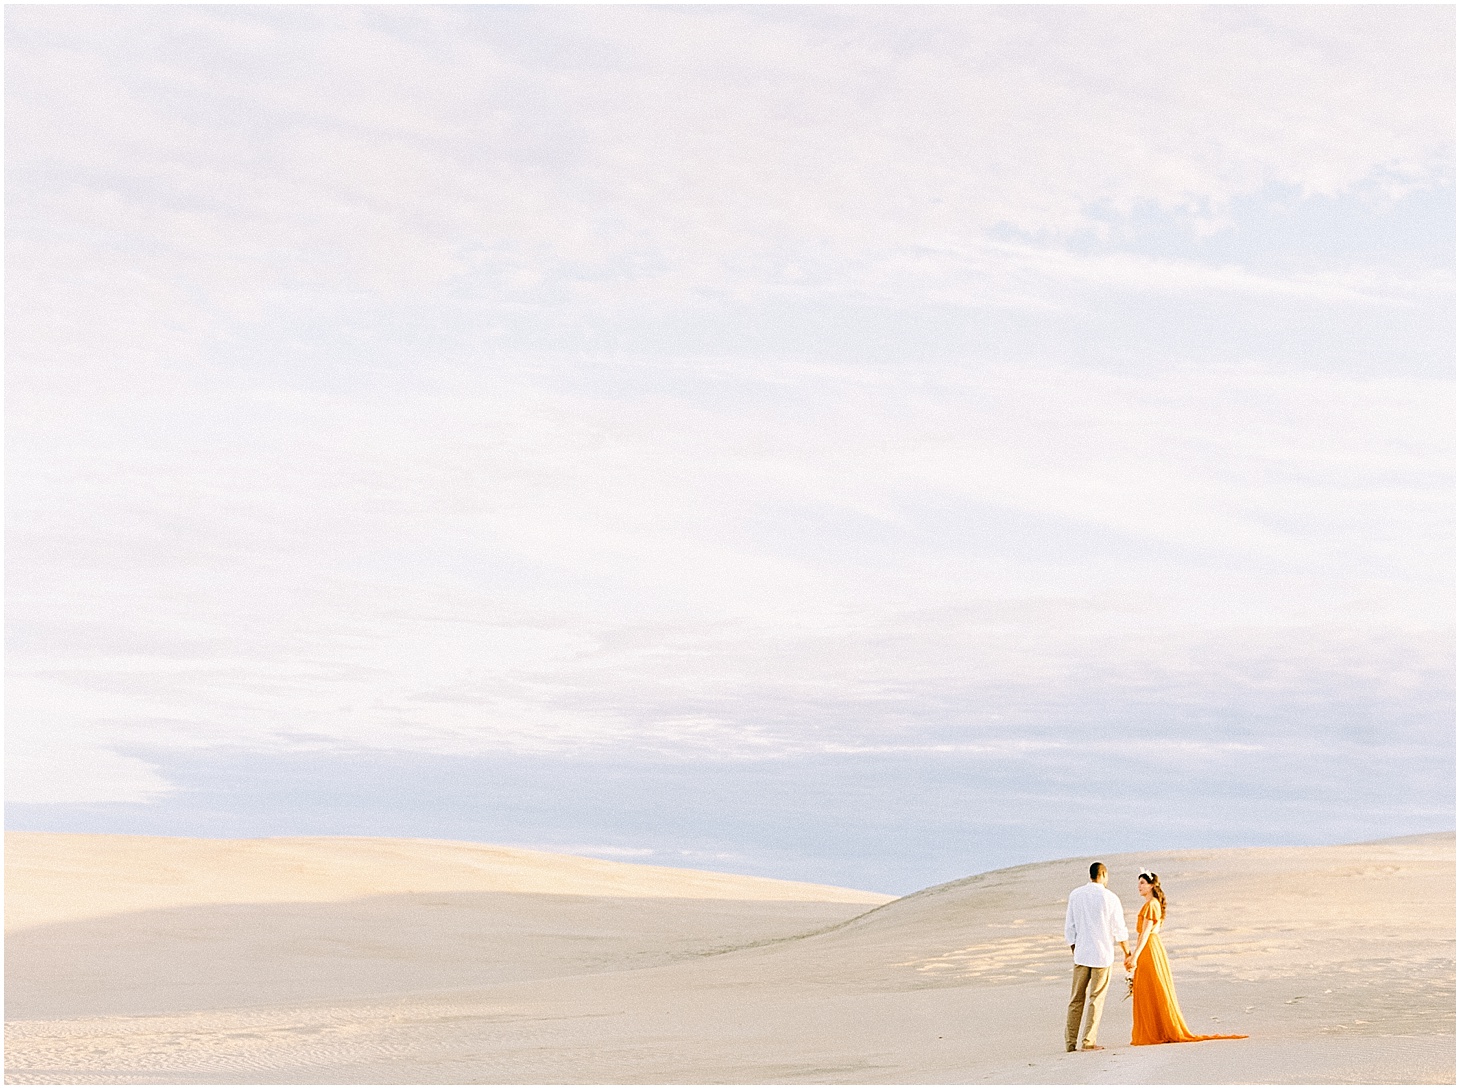 Desert Editorial with Aisle Society and Wedding Sparrow for Minted | Nikki Santerre Photography | Virginia Fine Art Film Wedding Photographer